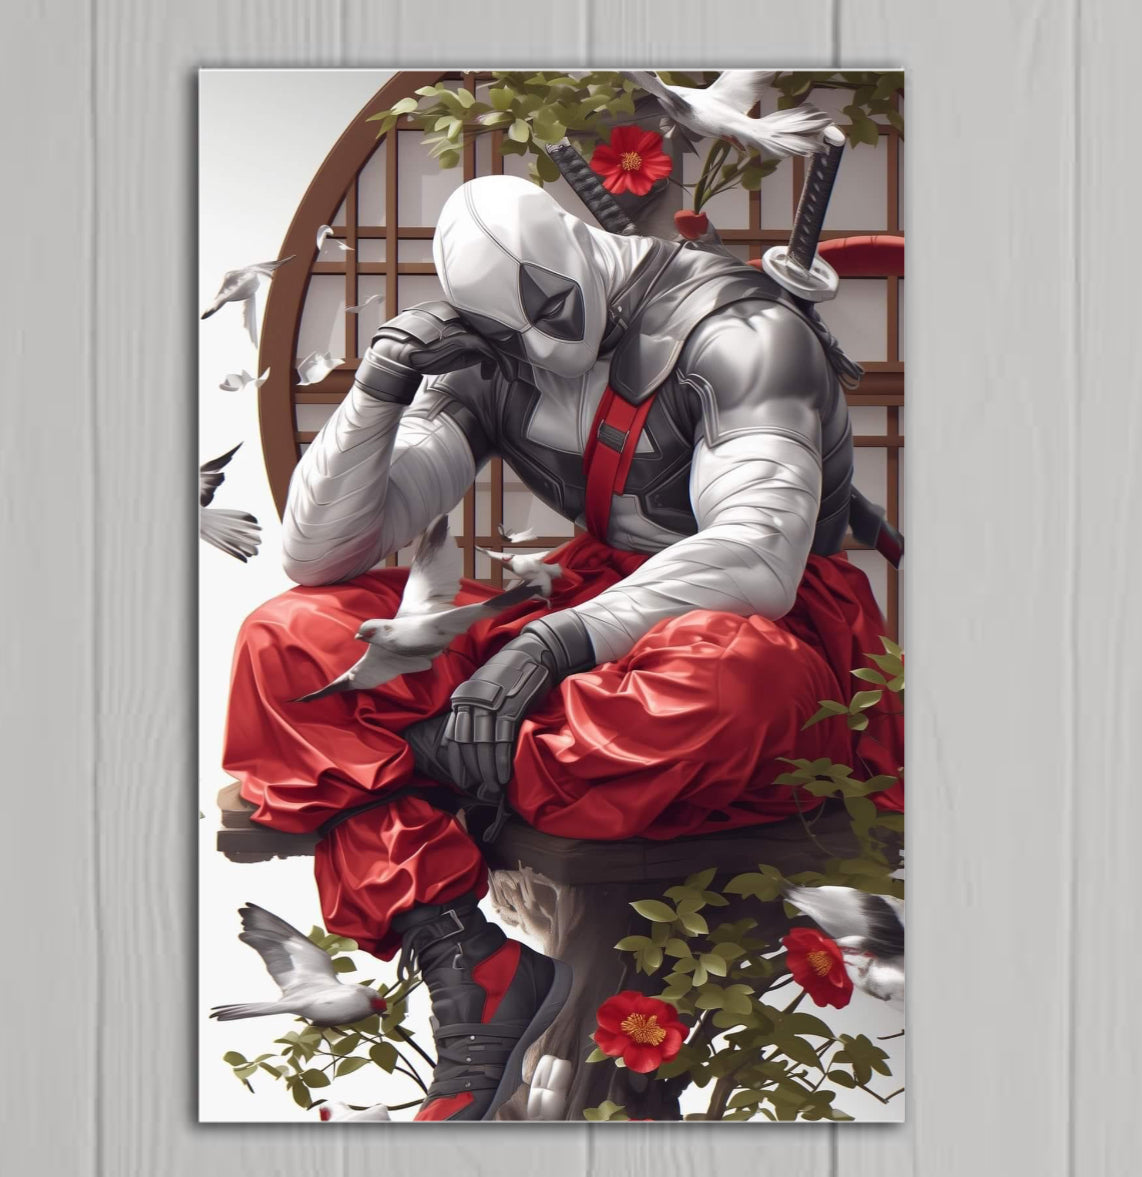 Deadpool - Canvas Hi-Res Wall Artwork - Asian Fusion Collection